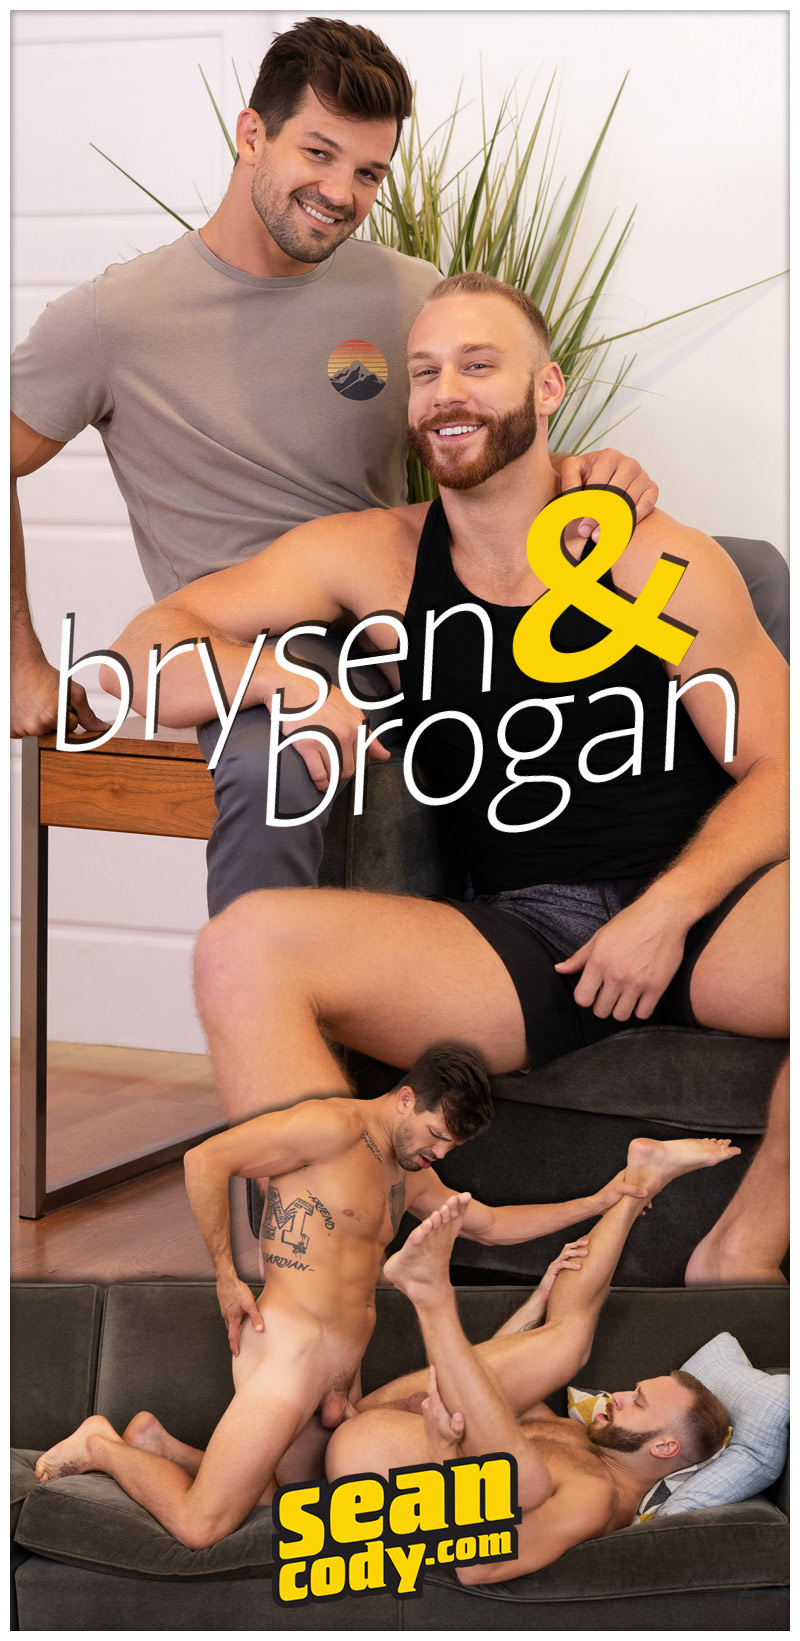 Brysen Tops Brogan at SeanCody